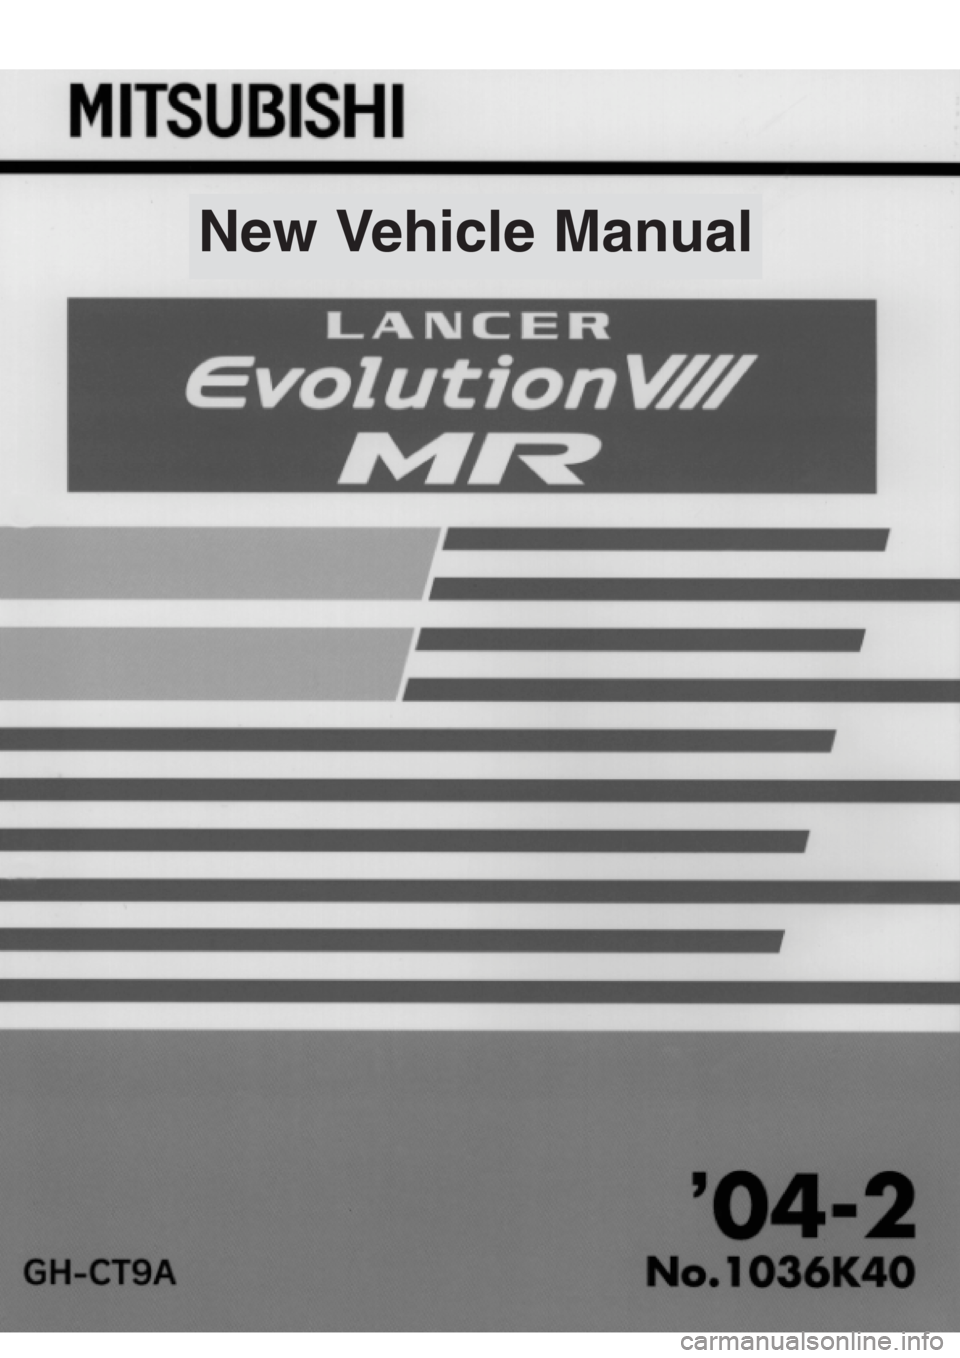 MITSUBISHI LANCER EVOLUTION VIII 2004  Workshop Manual New Vehicle Manual
  